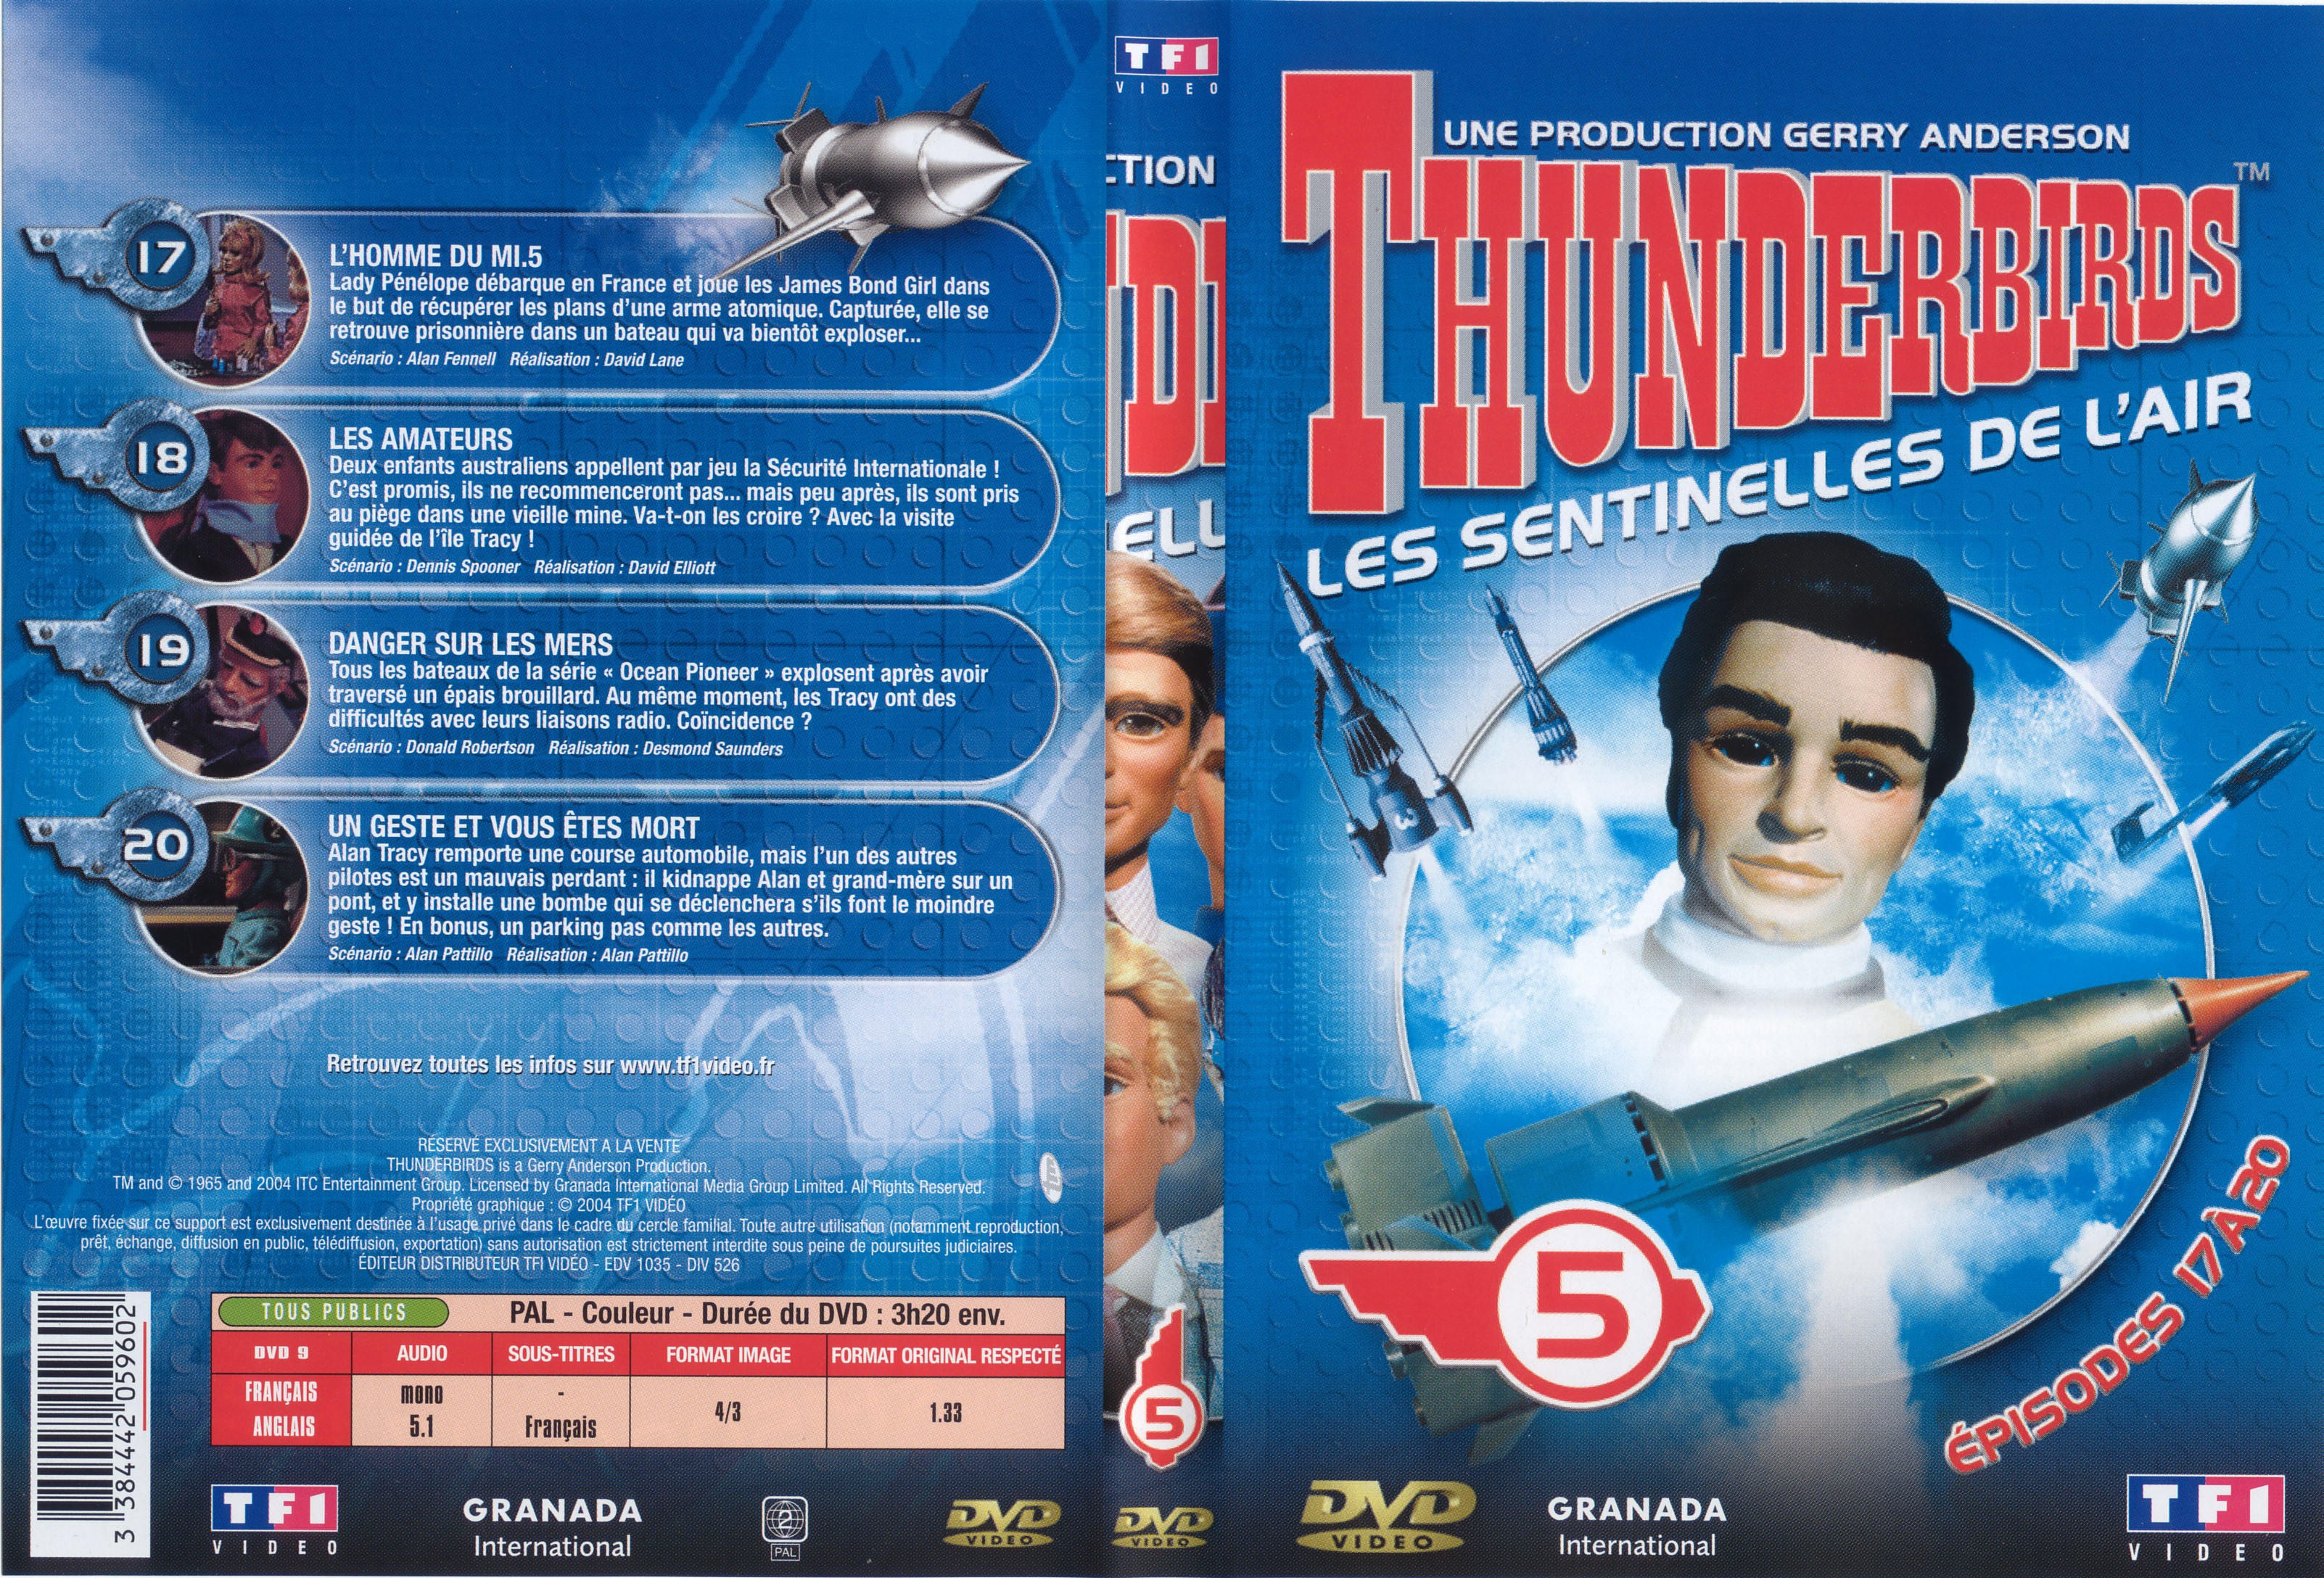 Jaquette DVD Thunderbirds vol 5